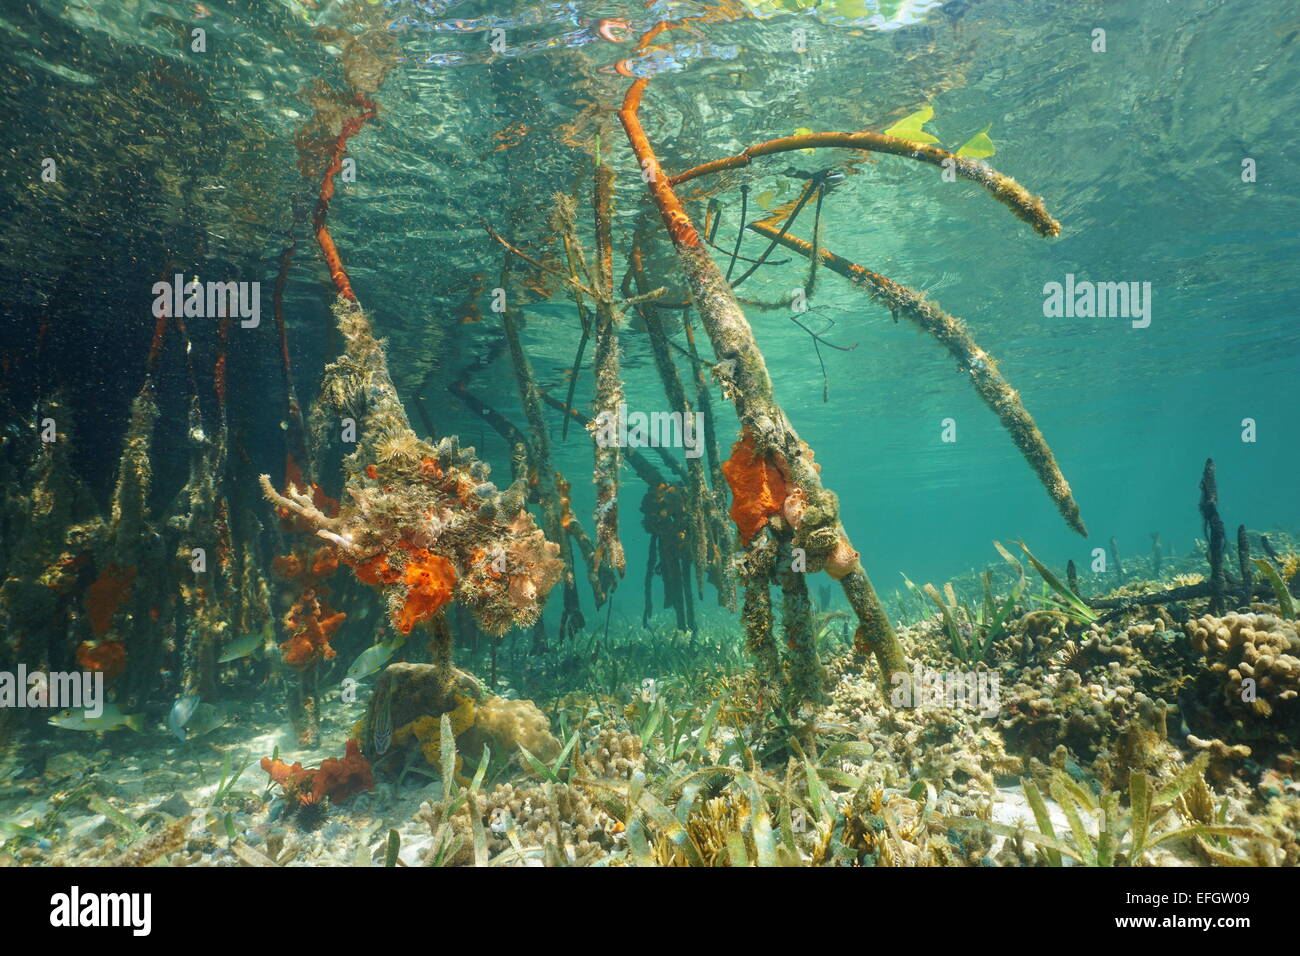 Underwater radici di mangrovia rossa, Rhizophora mangle, nel mar dei Caraibi, Panama Foto Stock